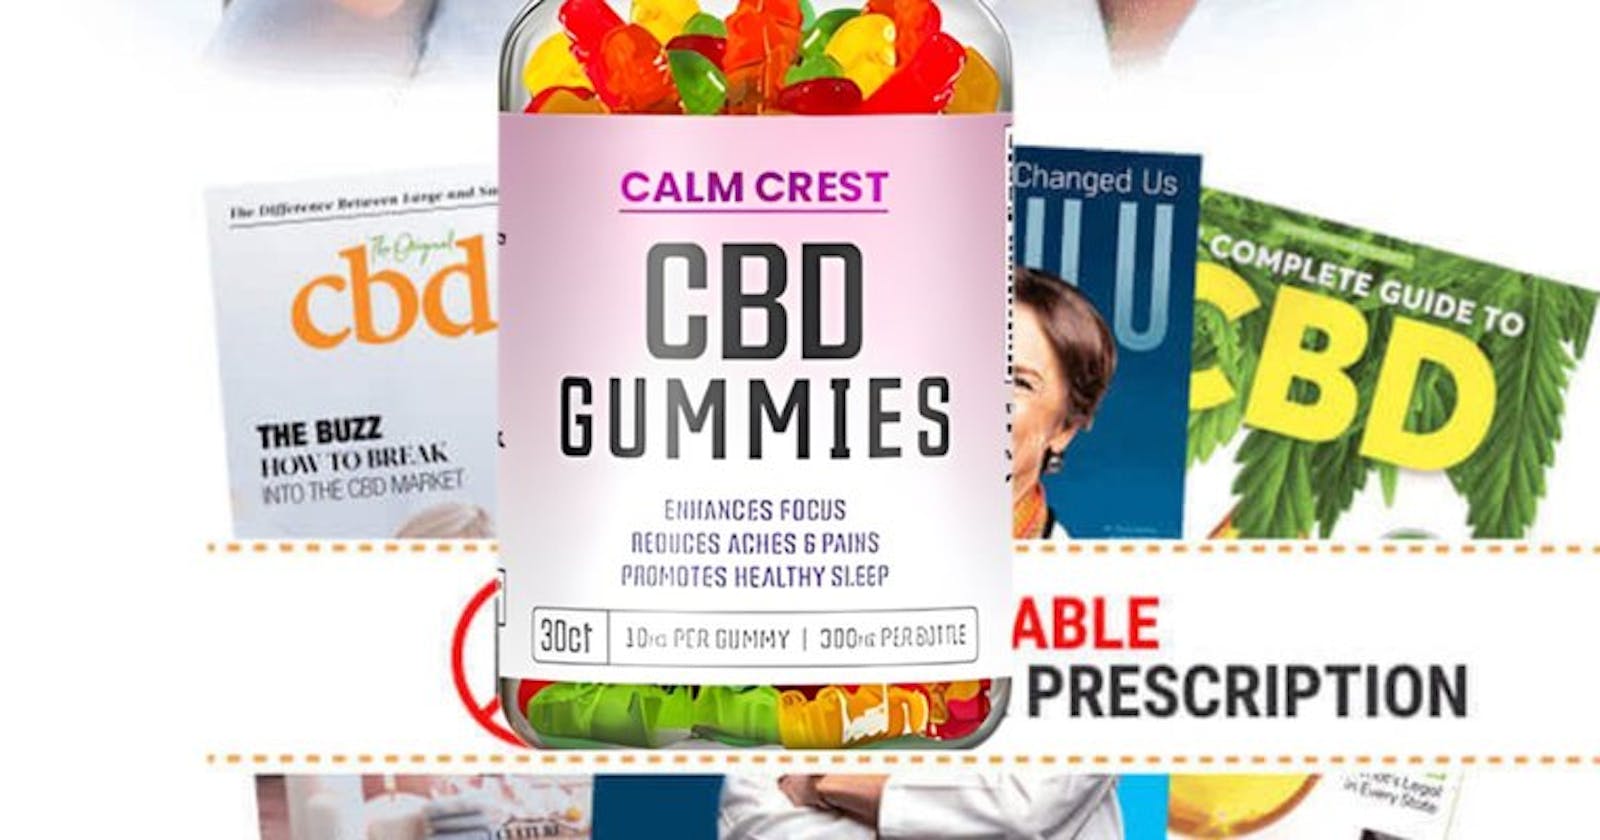 Calm Crest CBD Gummies -Hoax or Legit? Must Read Reviews & Cost!